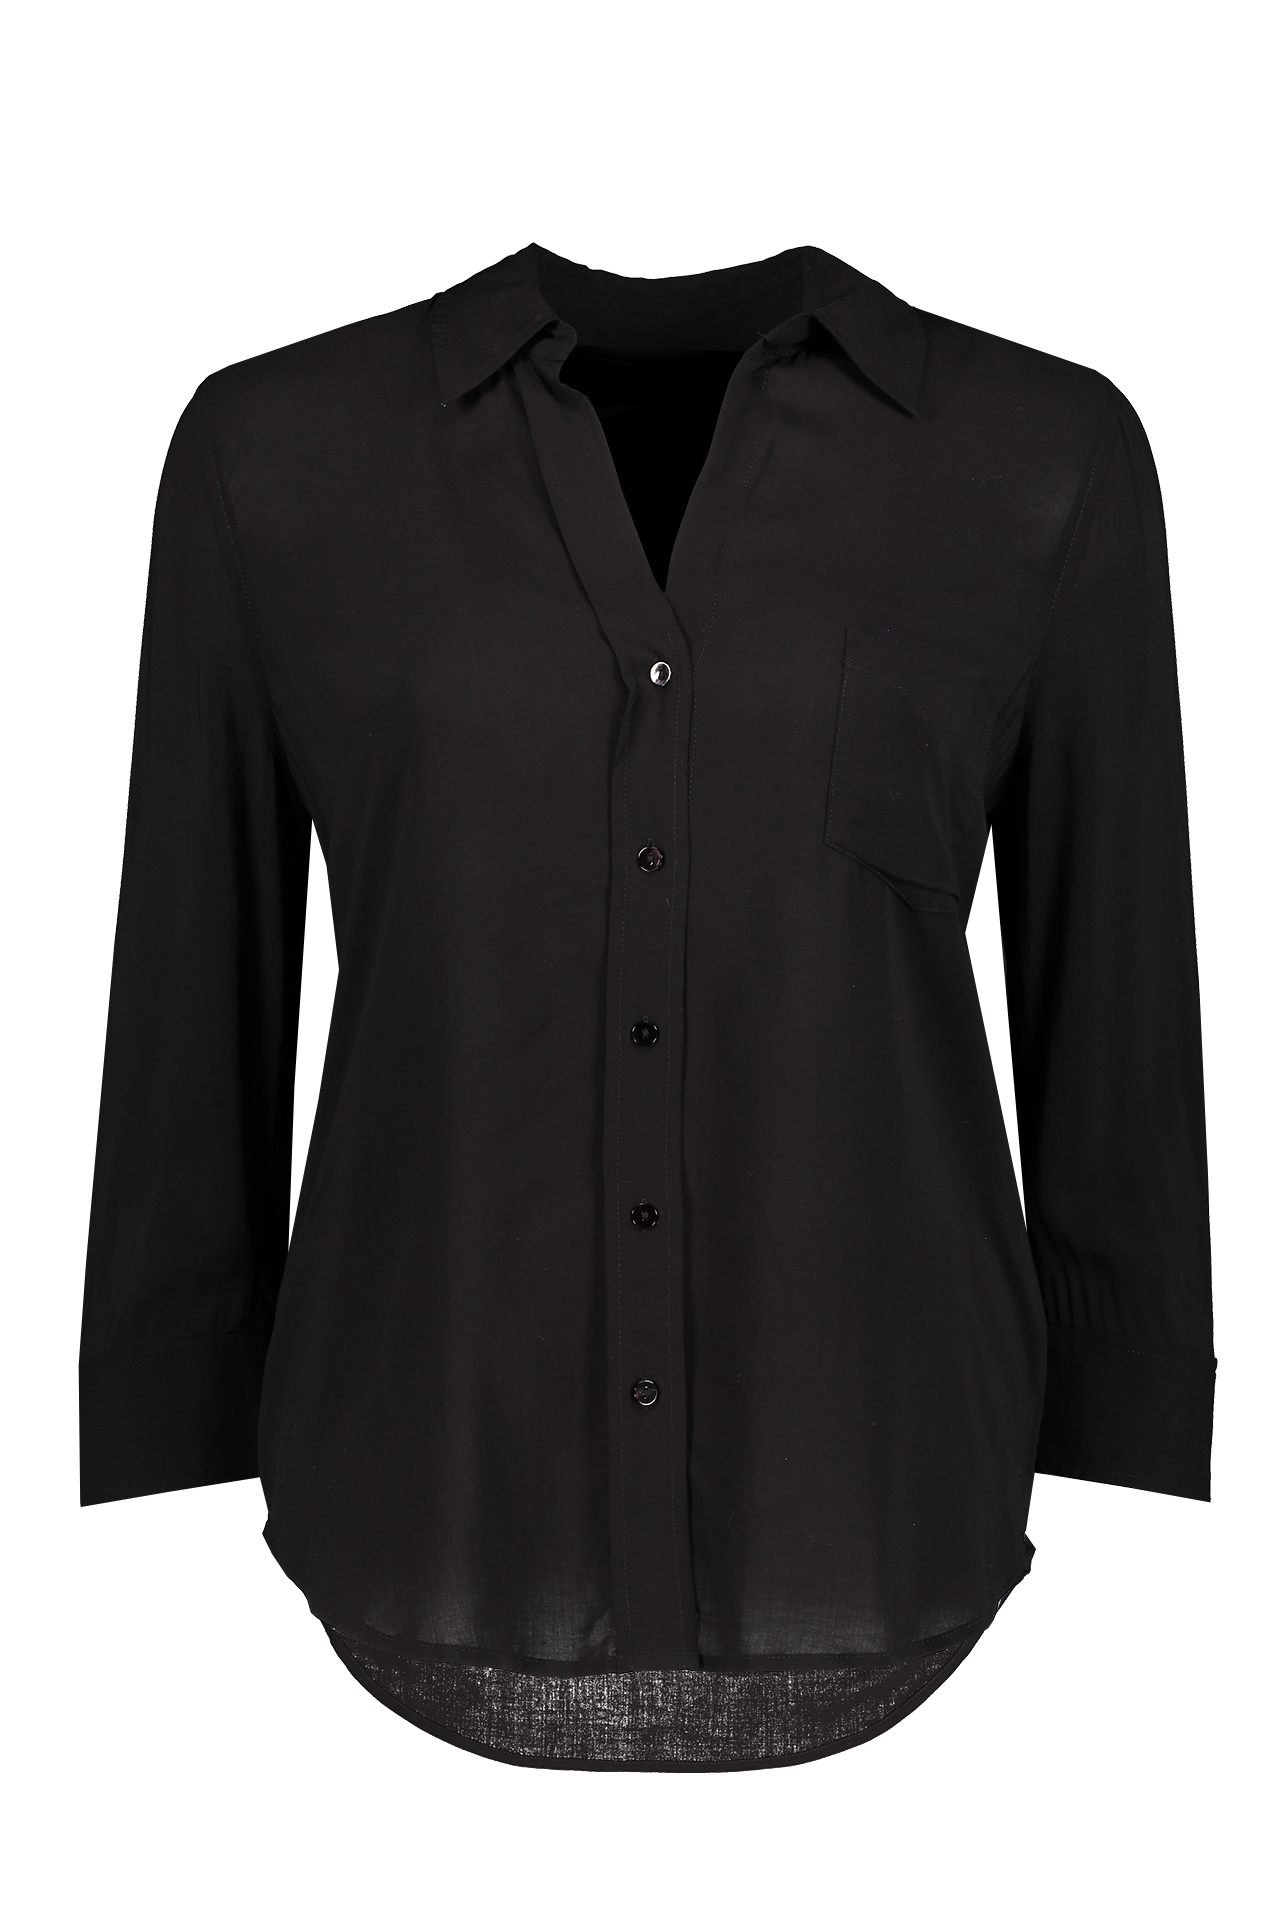 Lagence Ryan 3/4 Sleeve Blouse Black Front Mannequin Image (4615405994099)